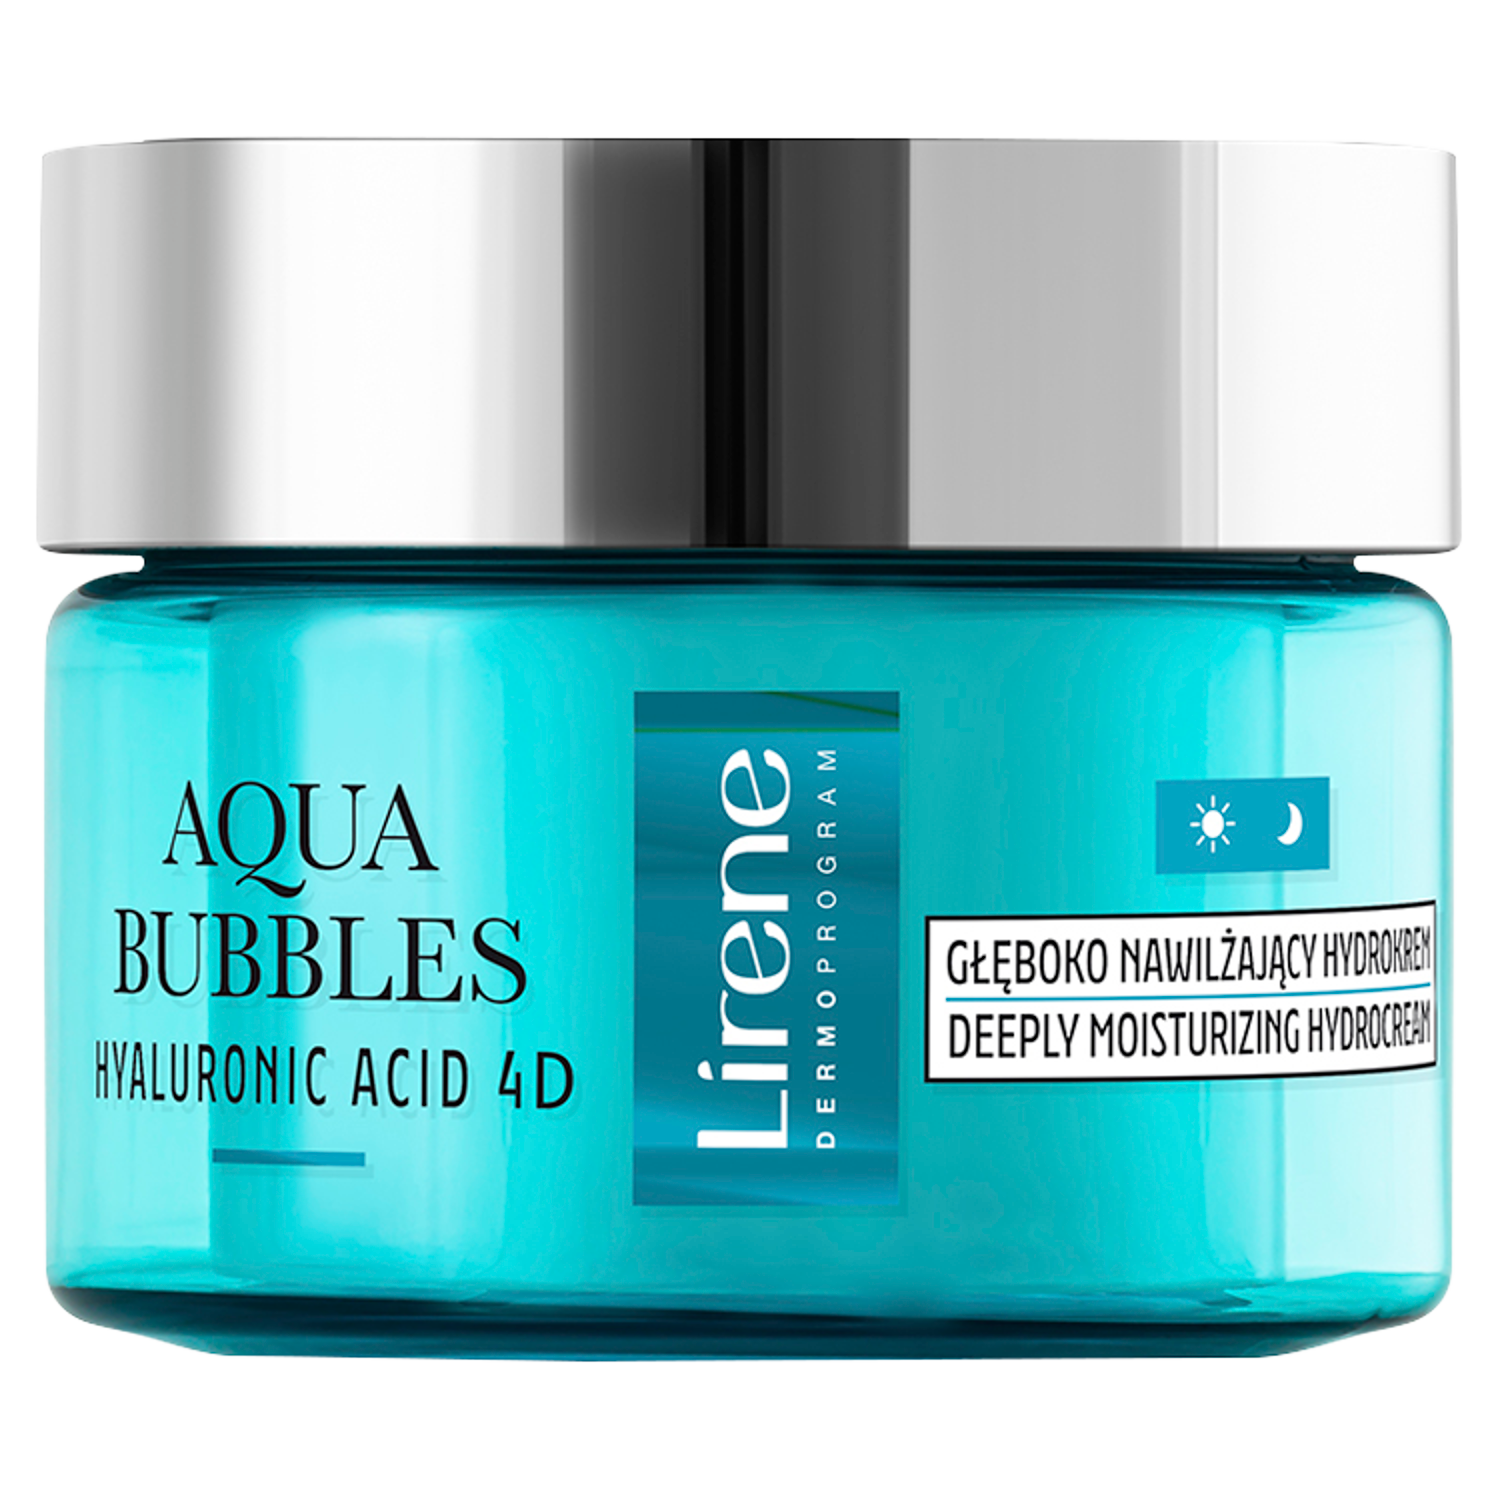 Глубоко увлажняющий гидрокрем для лица Lirene Aqua Bubbles, 50 мл